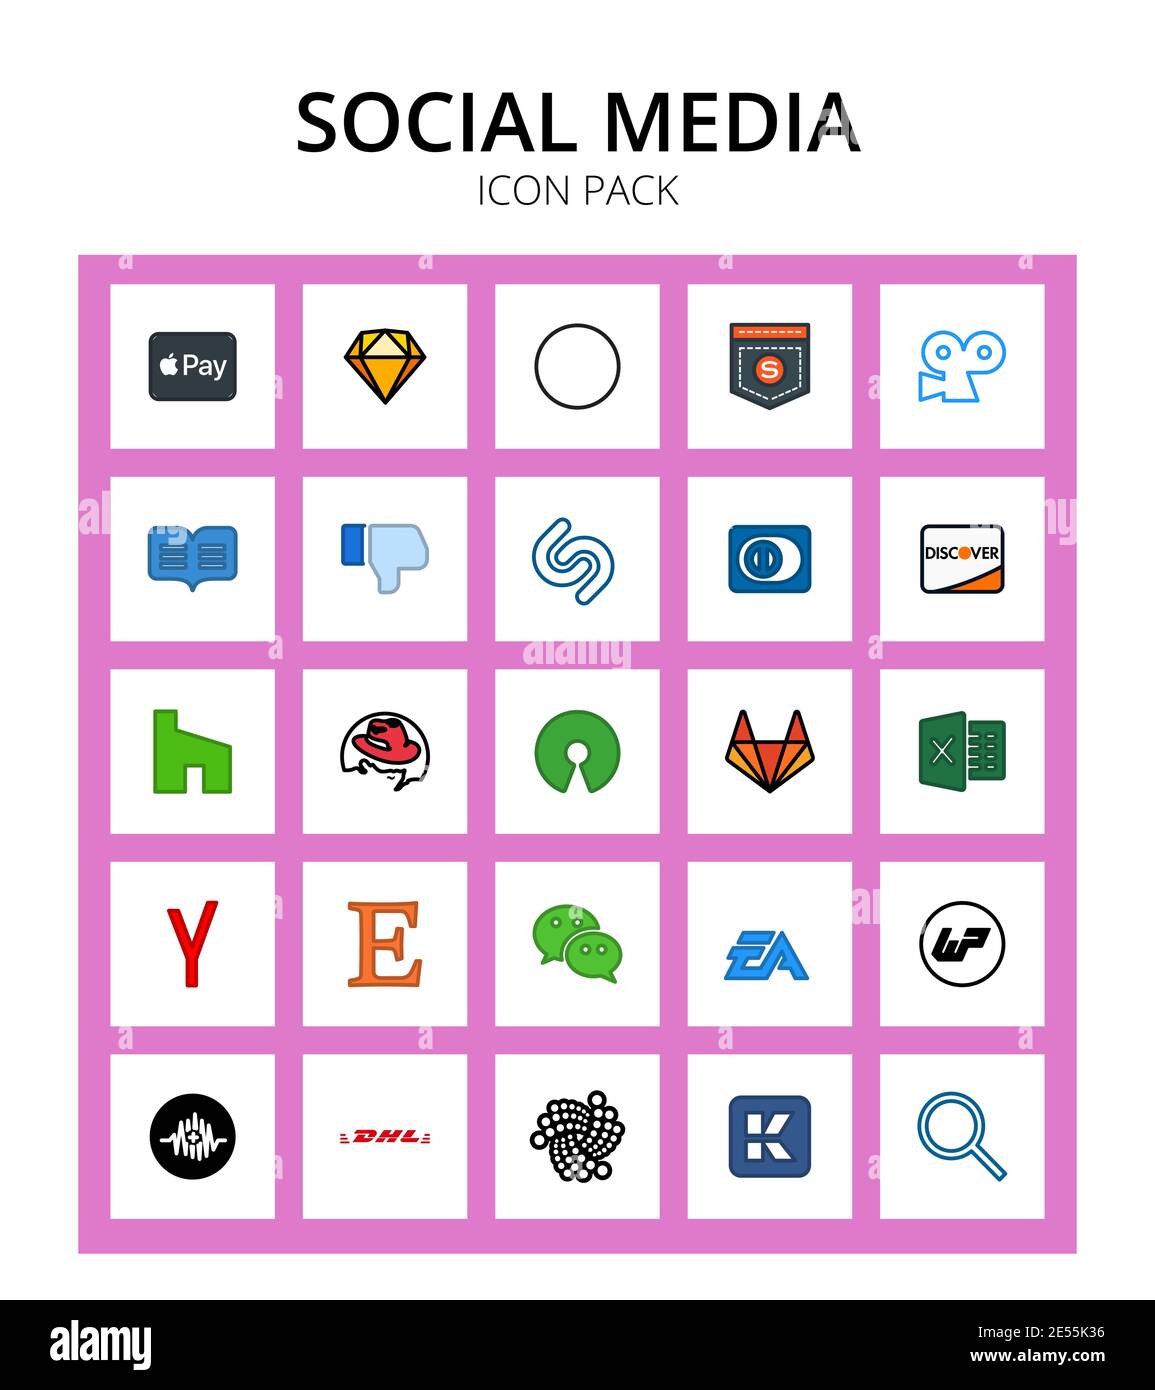 25 Social Media osi, houzz, Abneigung, Kreditkarte, Kreditkarte editierbar Vektor-Design-Elemente Stock Vektor